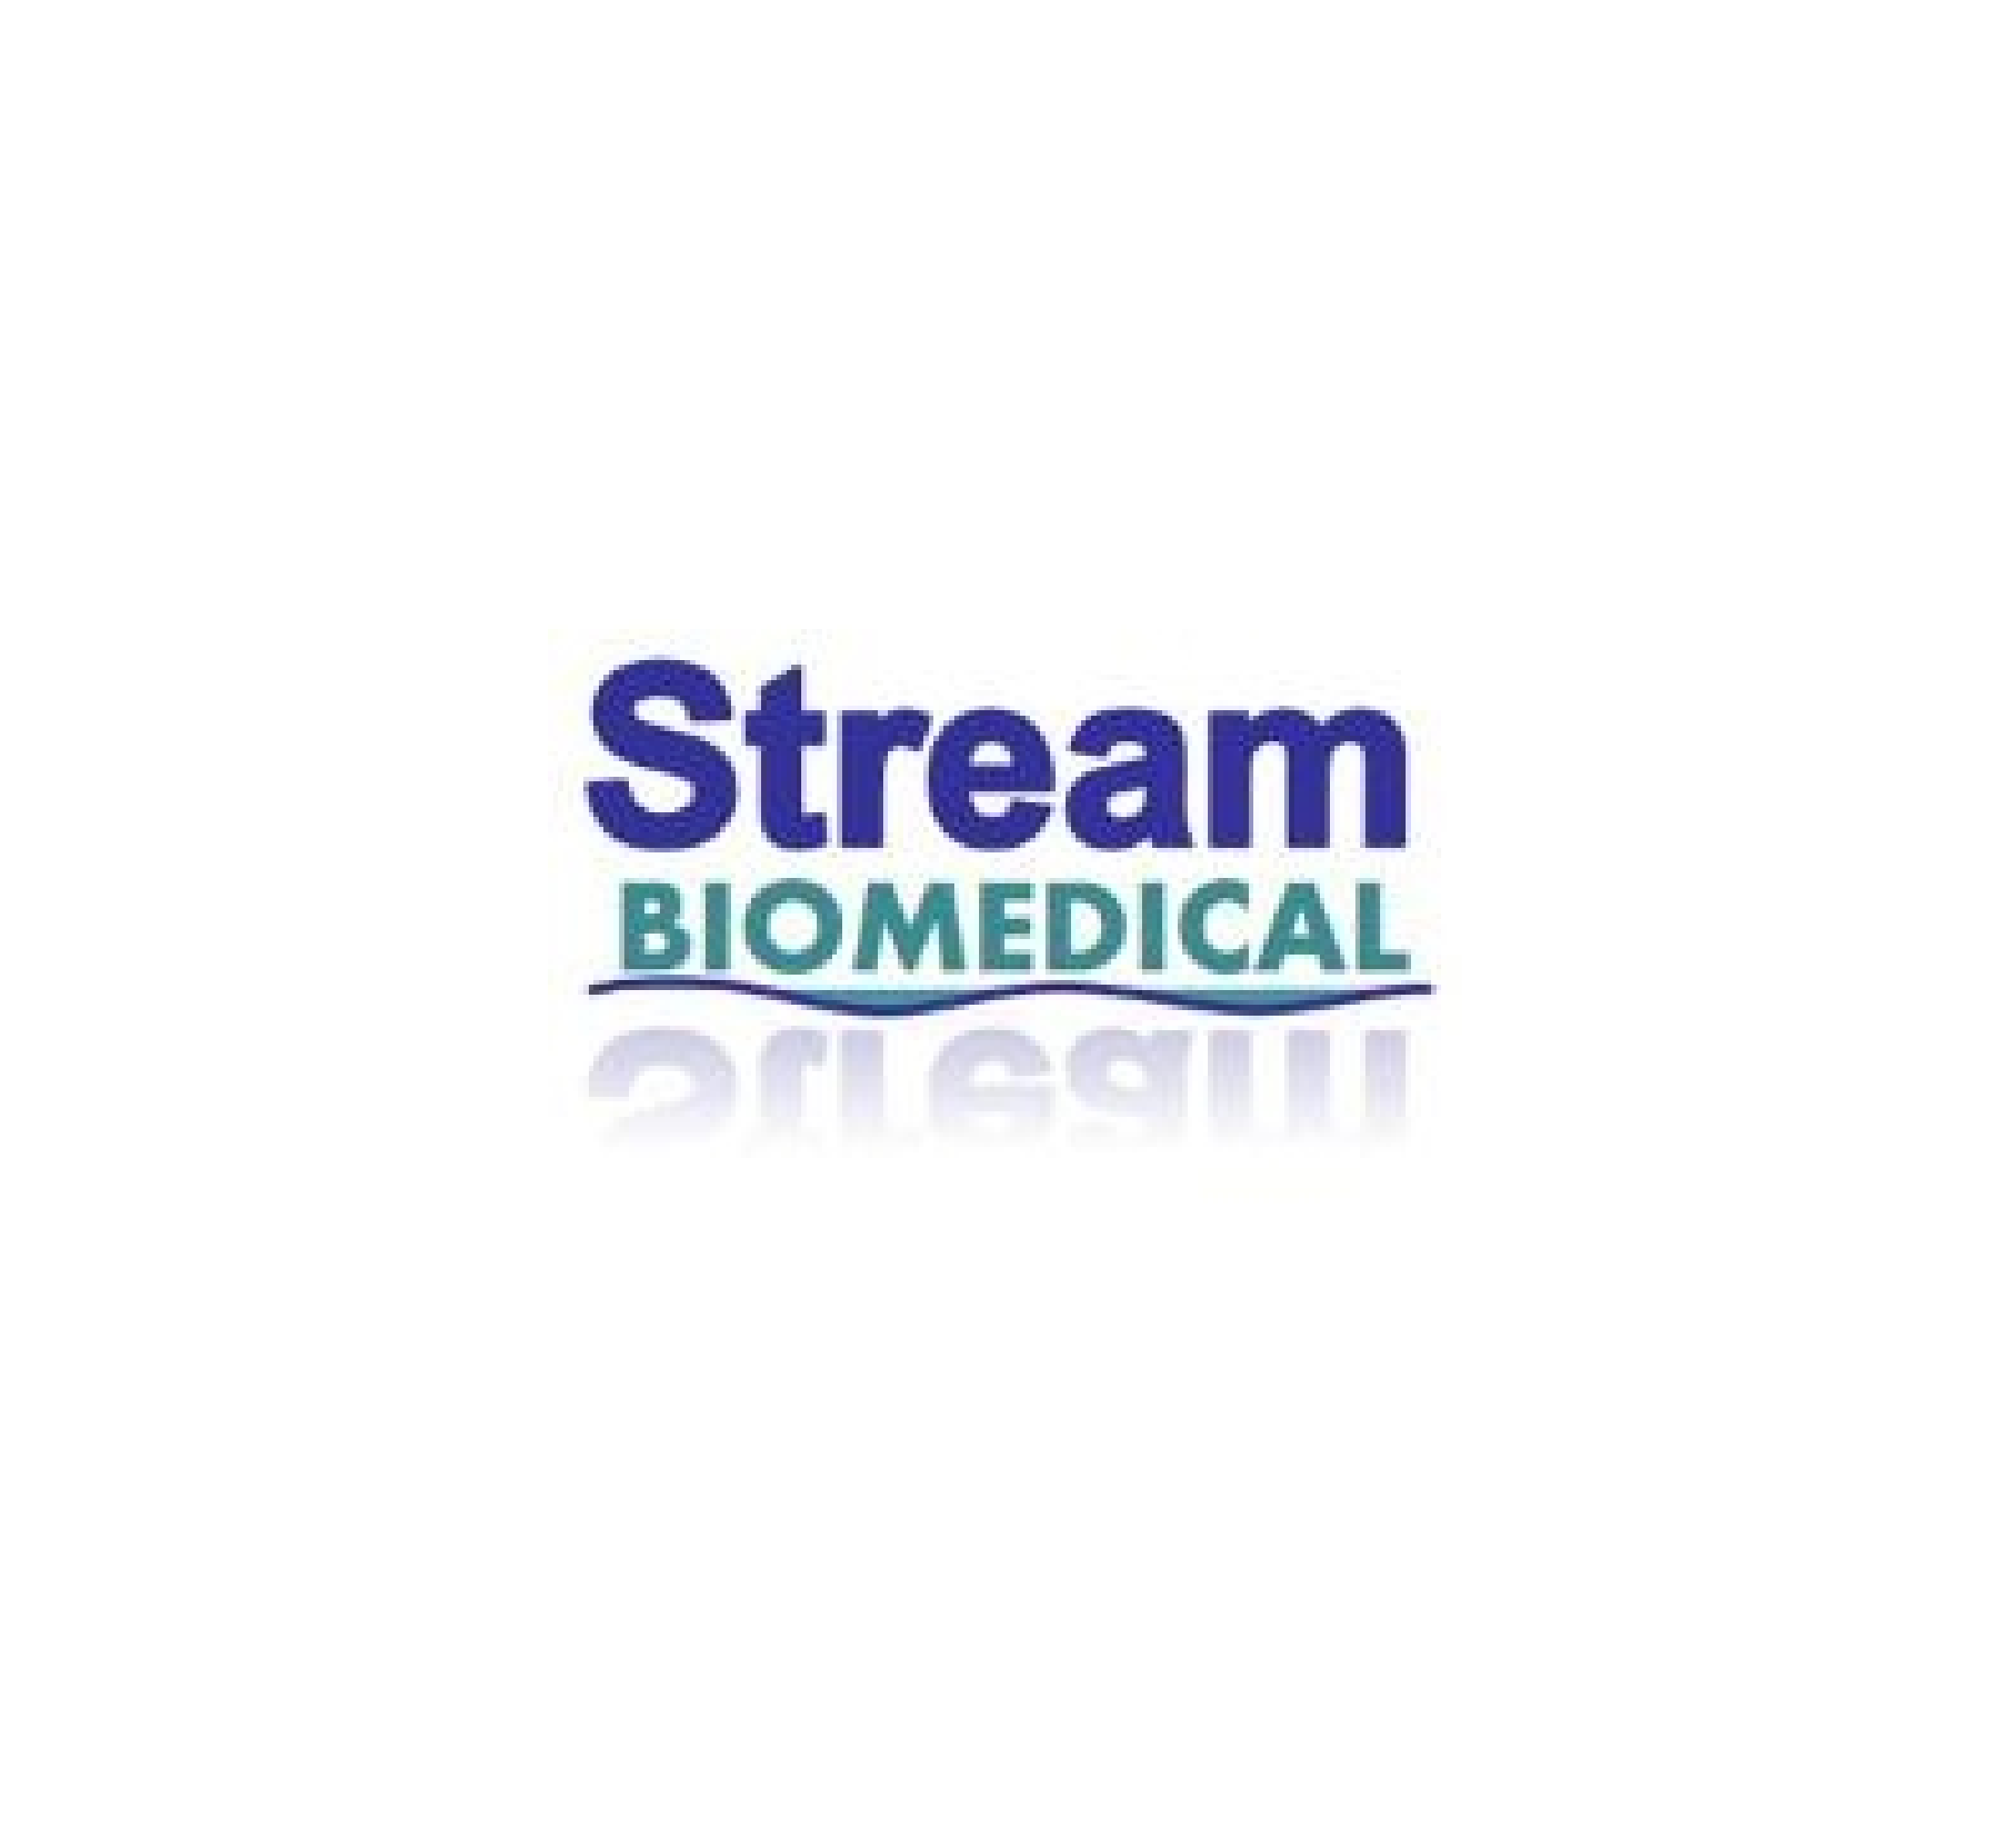 Stream Biomedical